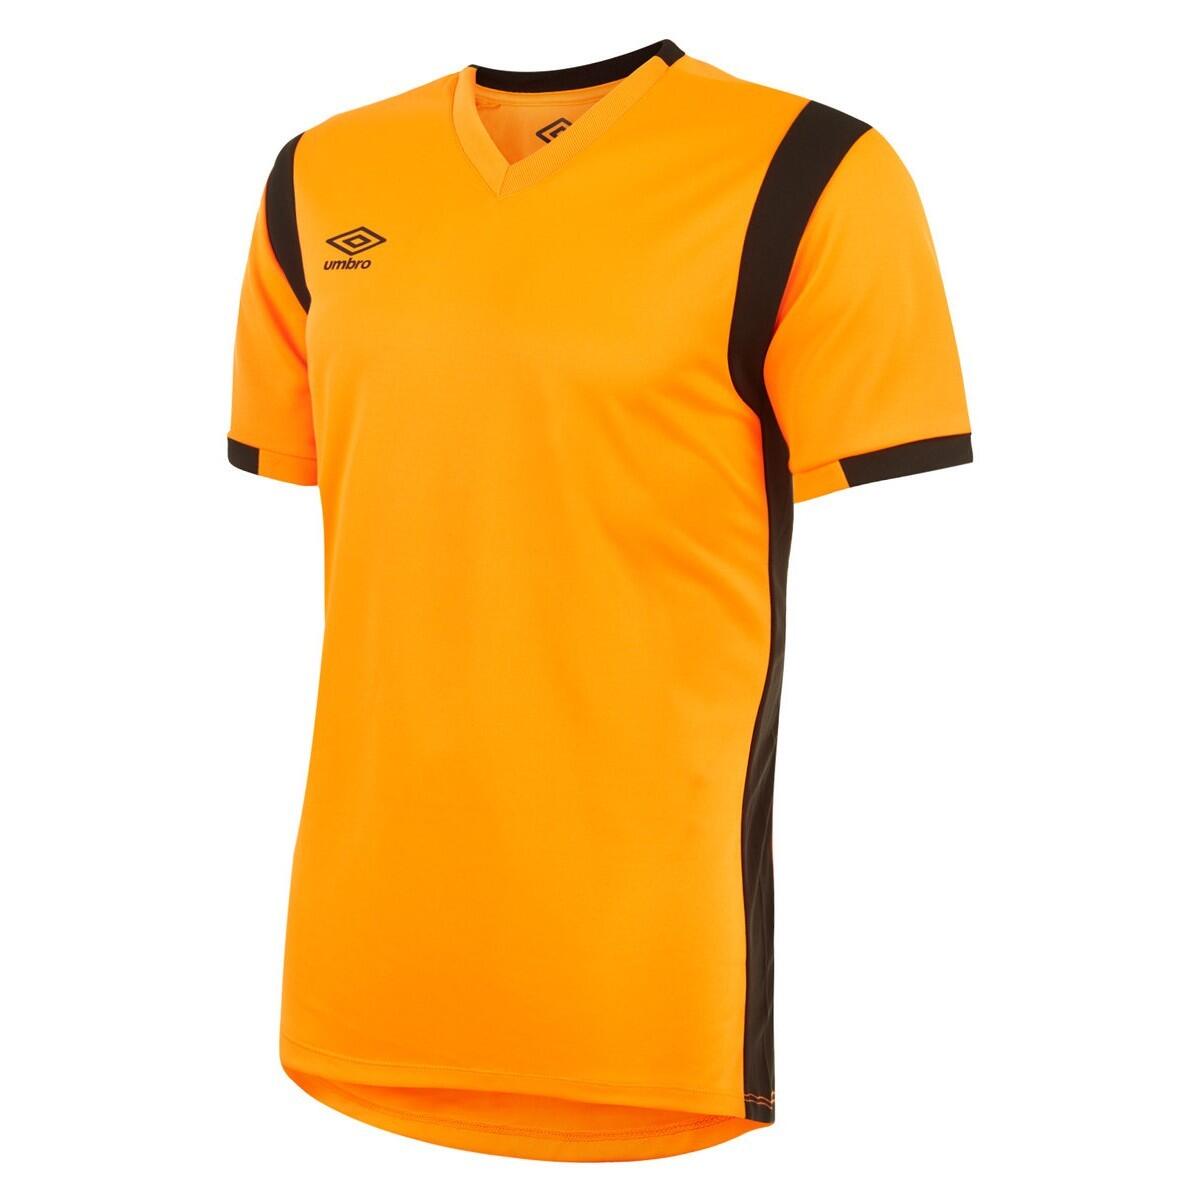 UMBRO Mens Spartan ShortSleeved Jersey (Shocking Orange/Black)